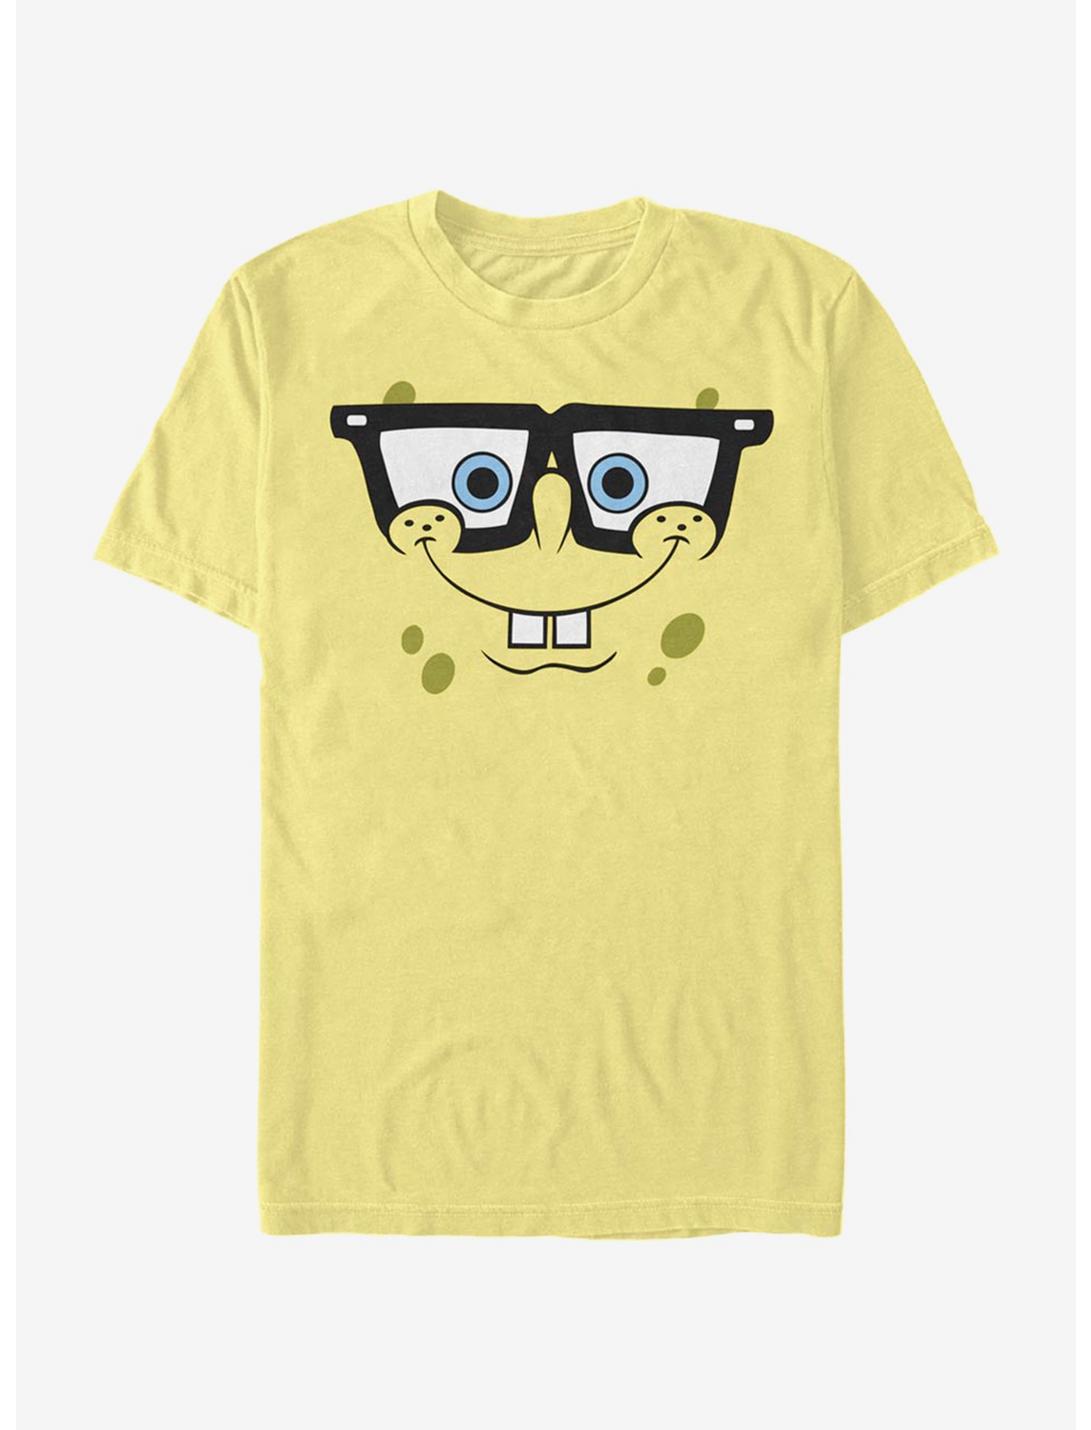 SpongeBob SquarePants Big Face Nerd T-Shirt, BANANA, hi-res